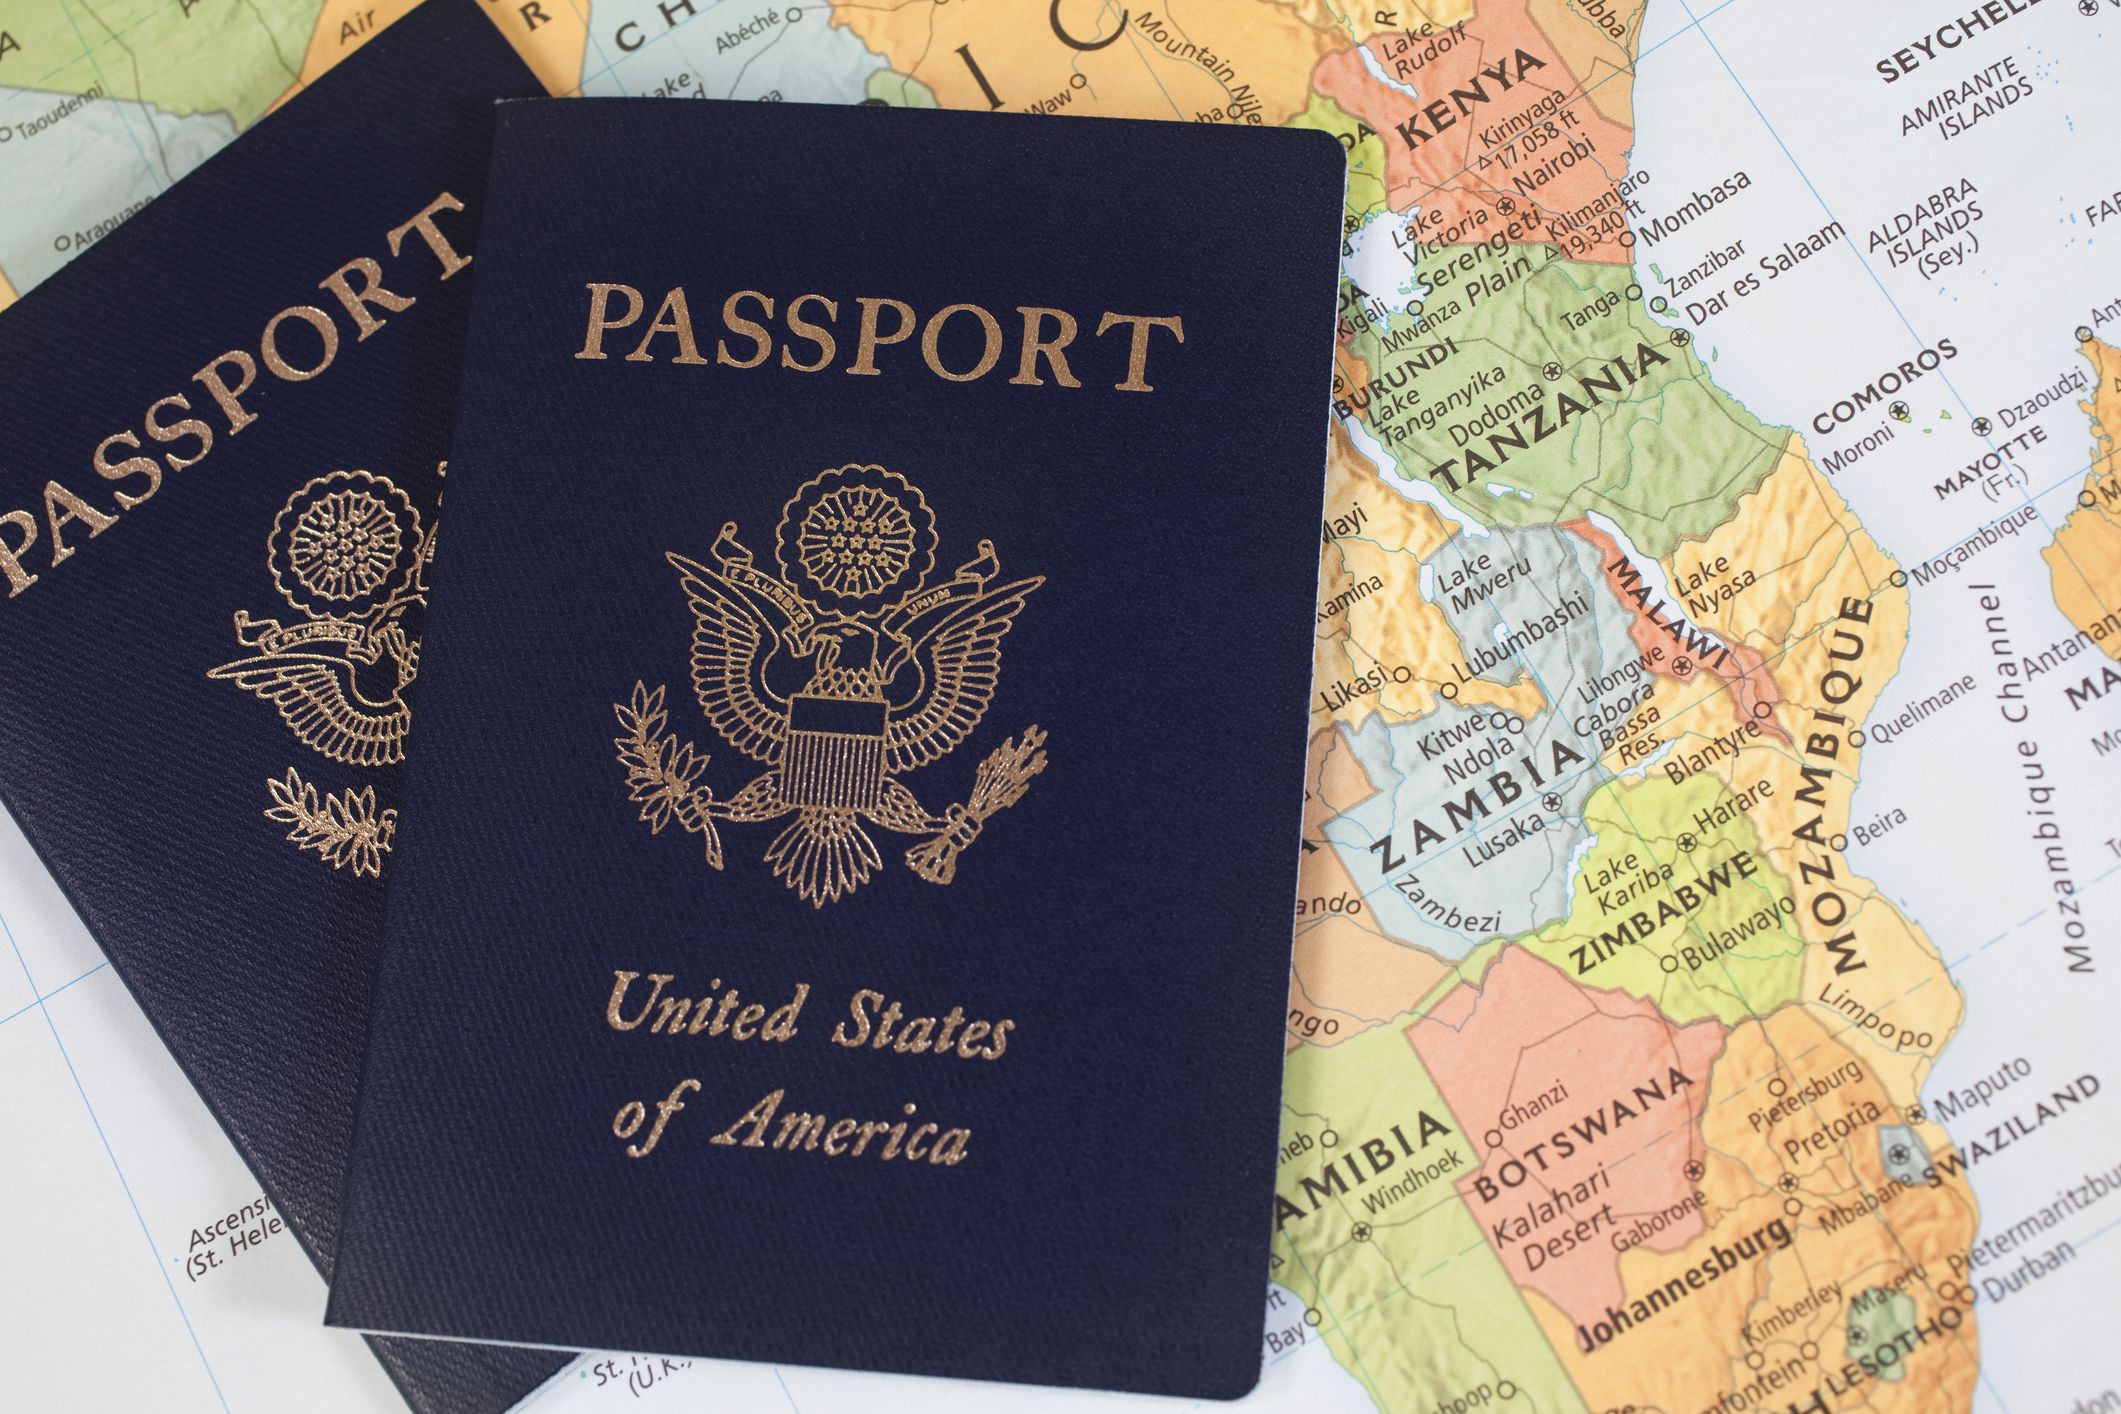 How to Expedite Your U.S. Passport Application